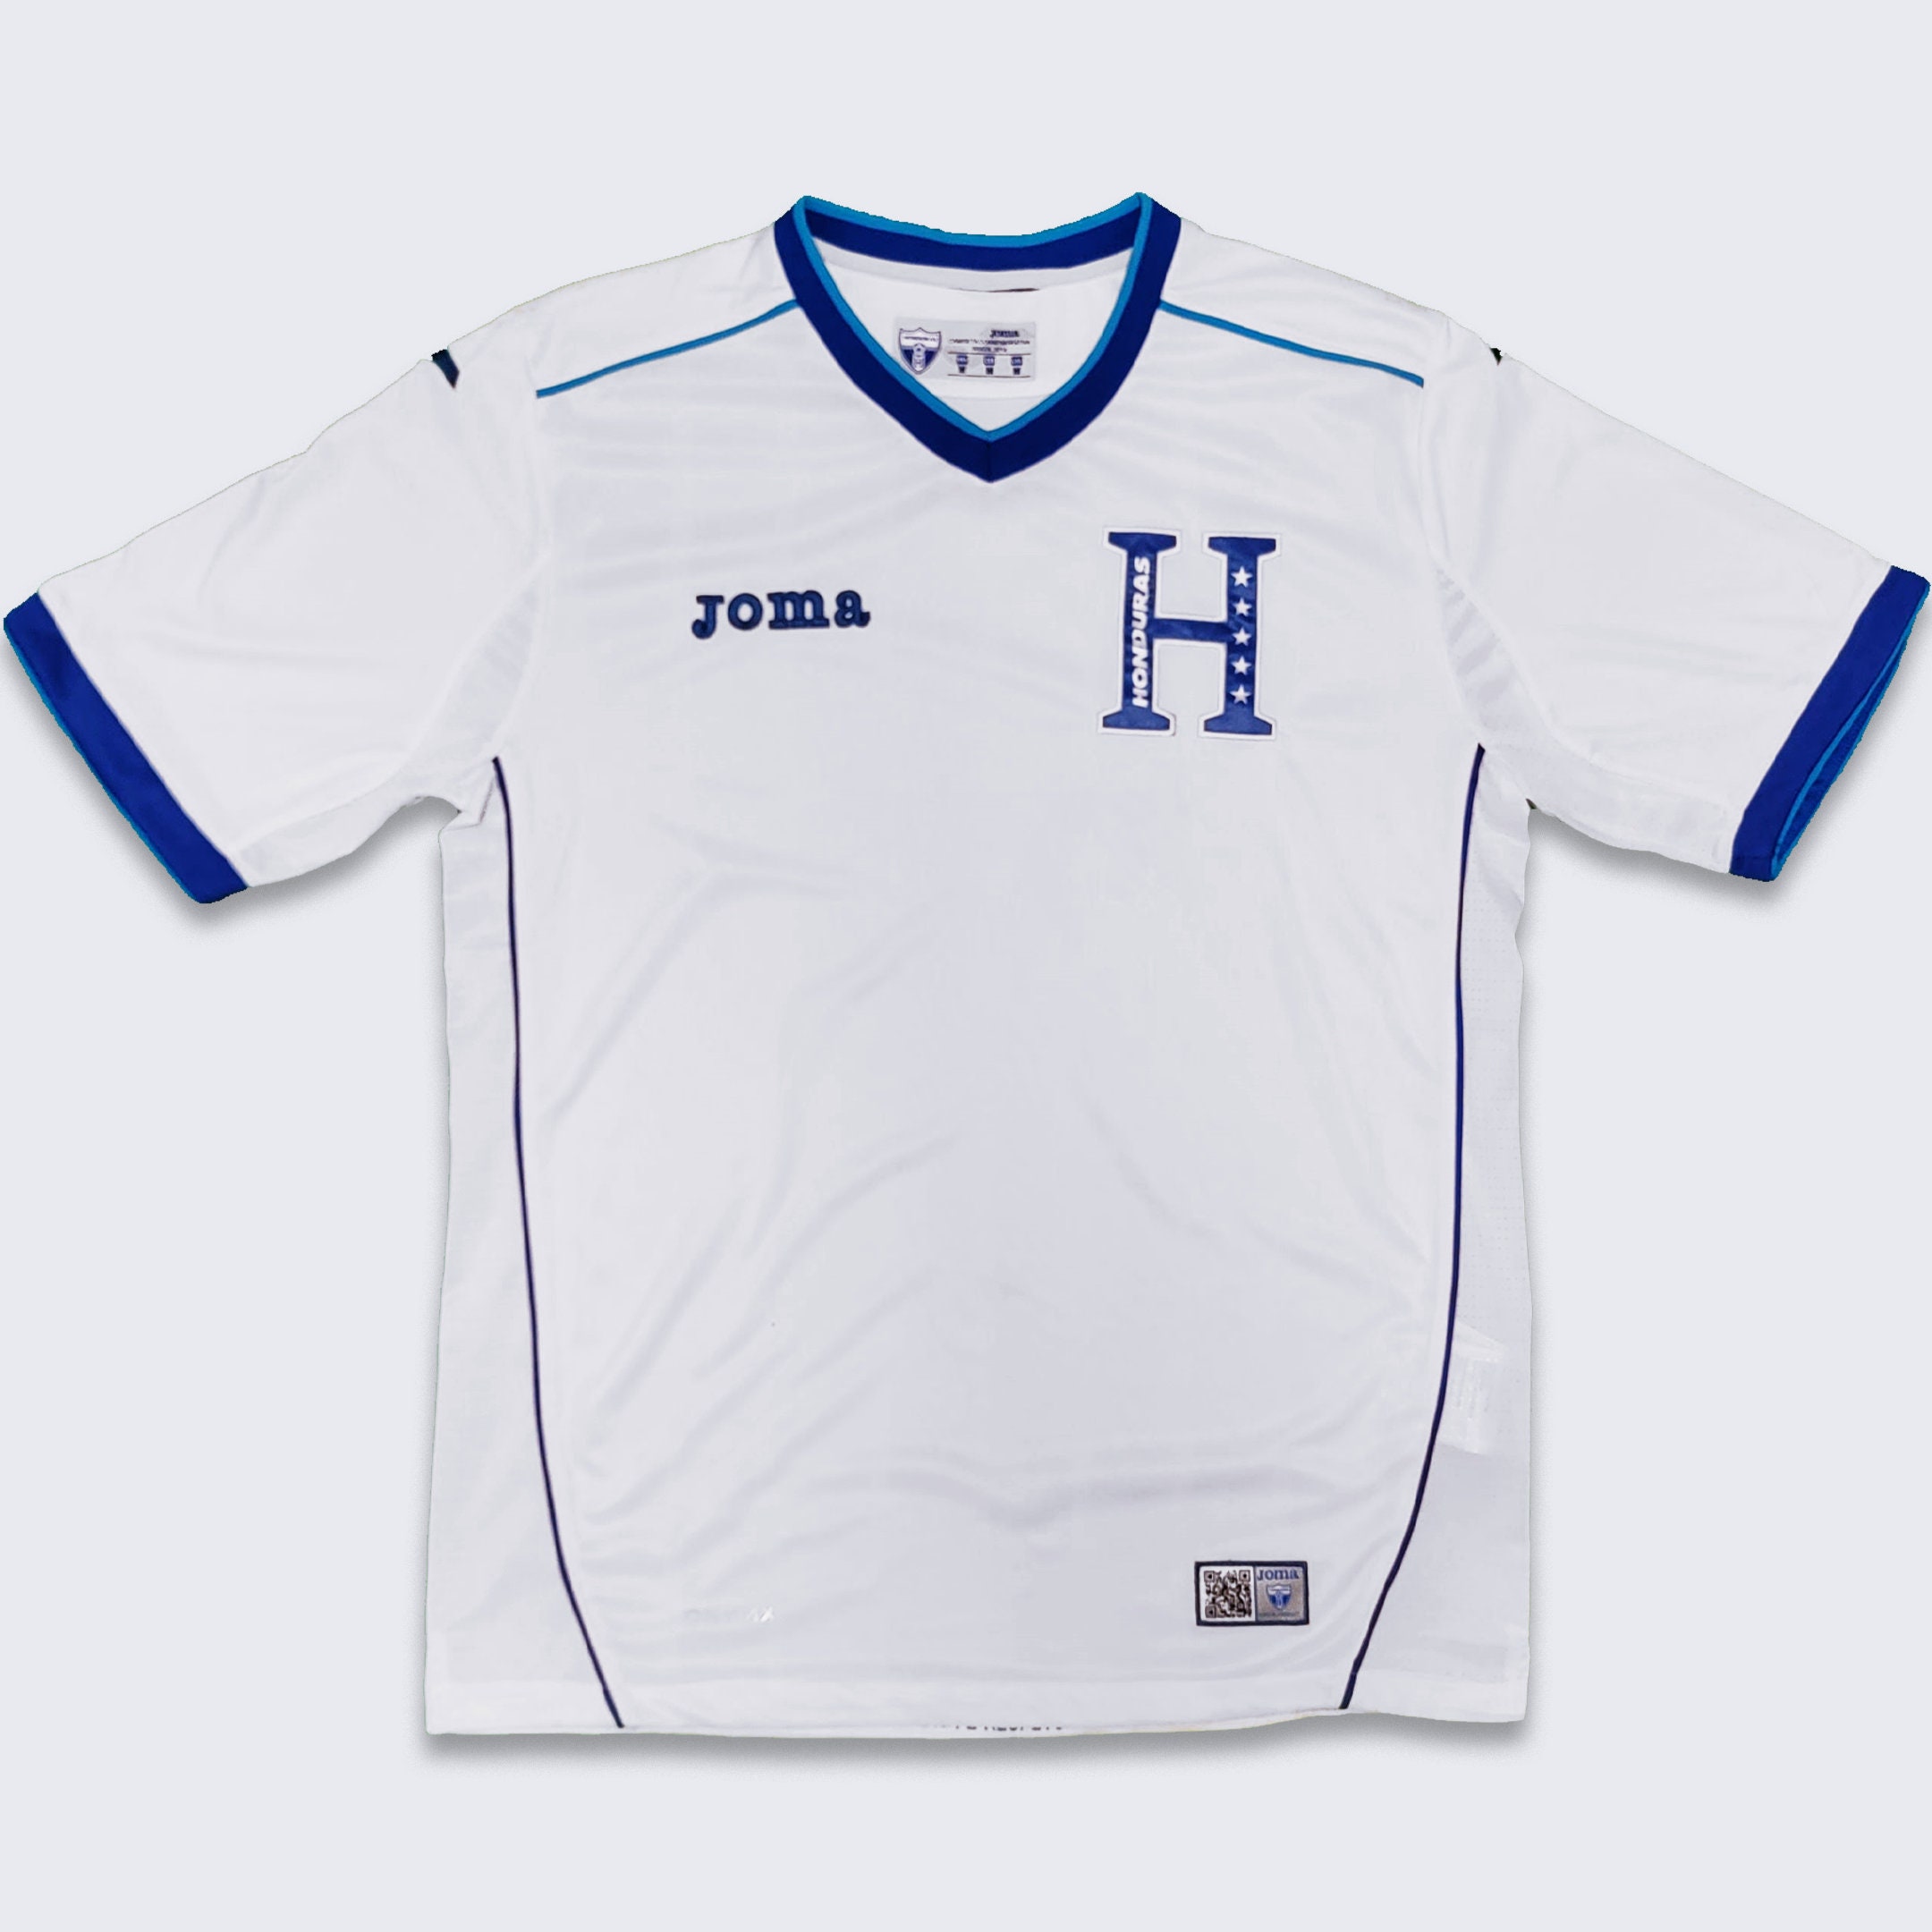 Honduras youth soccer uniform